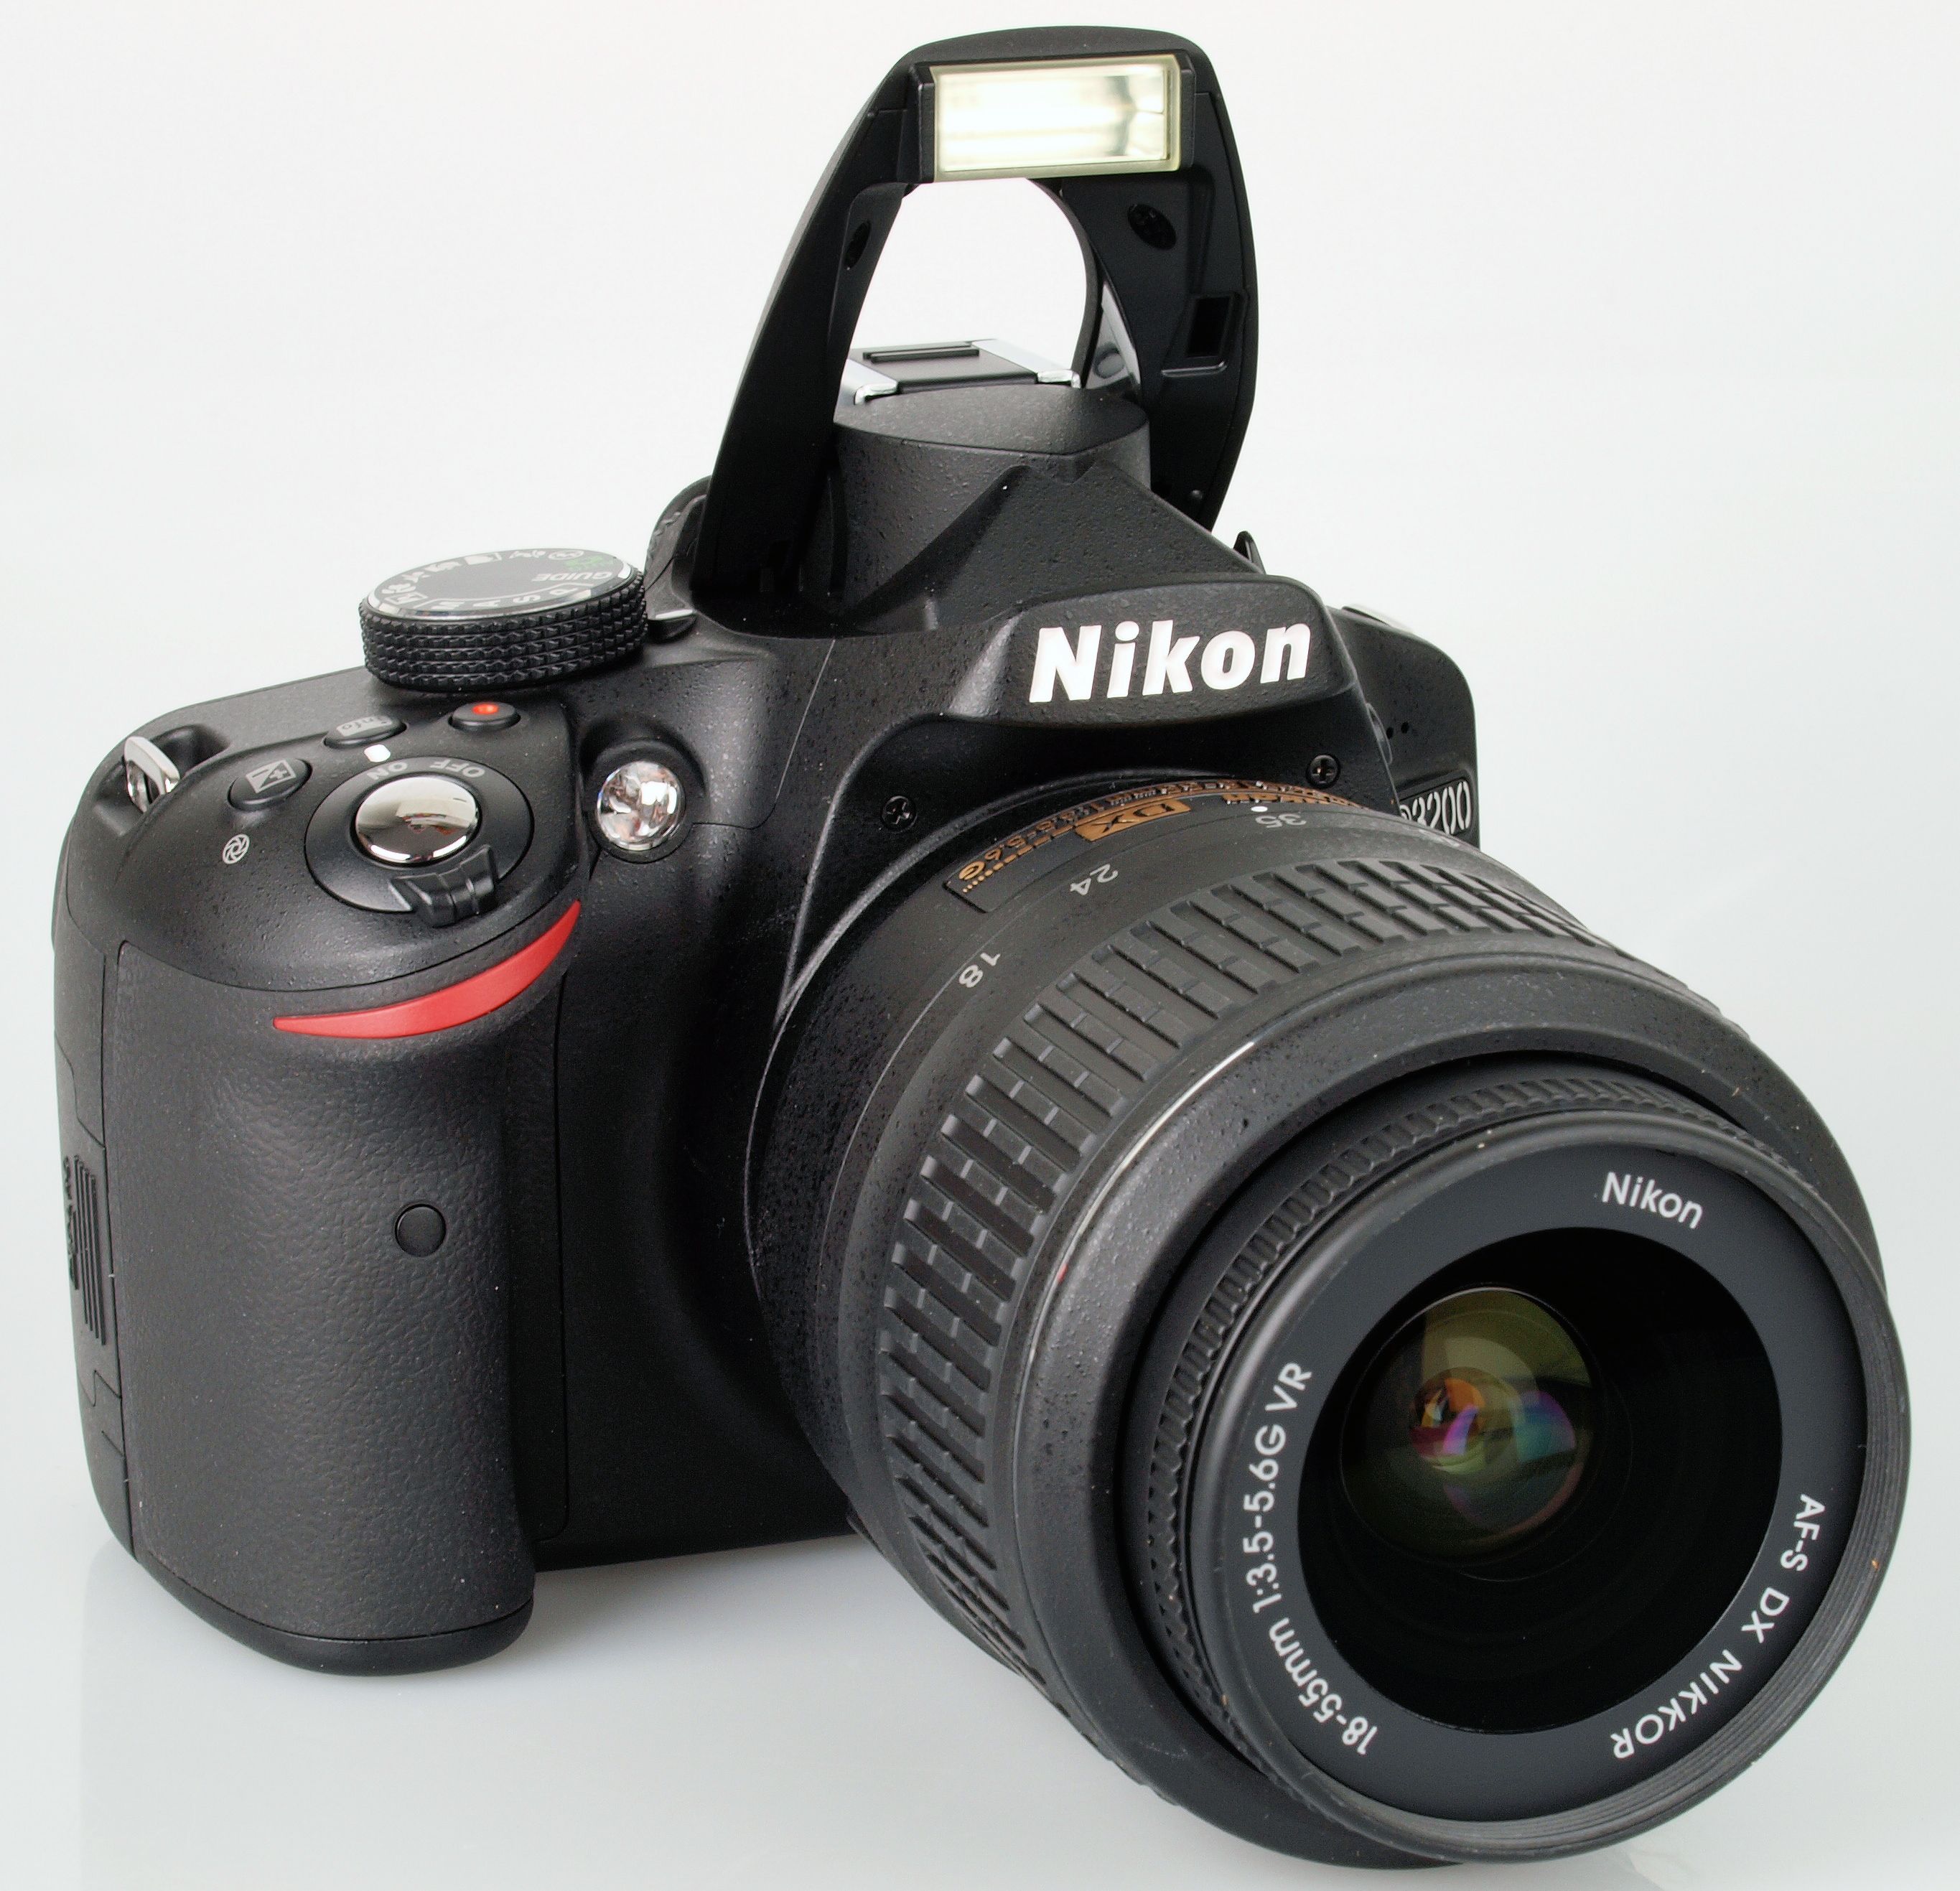  Nikon D3200 24.2 MP CMOS Digital SLR with 18-55mm VR and  55-200mm Non-VR DX Zoom Lenses : Camera Digital : Electronics